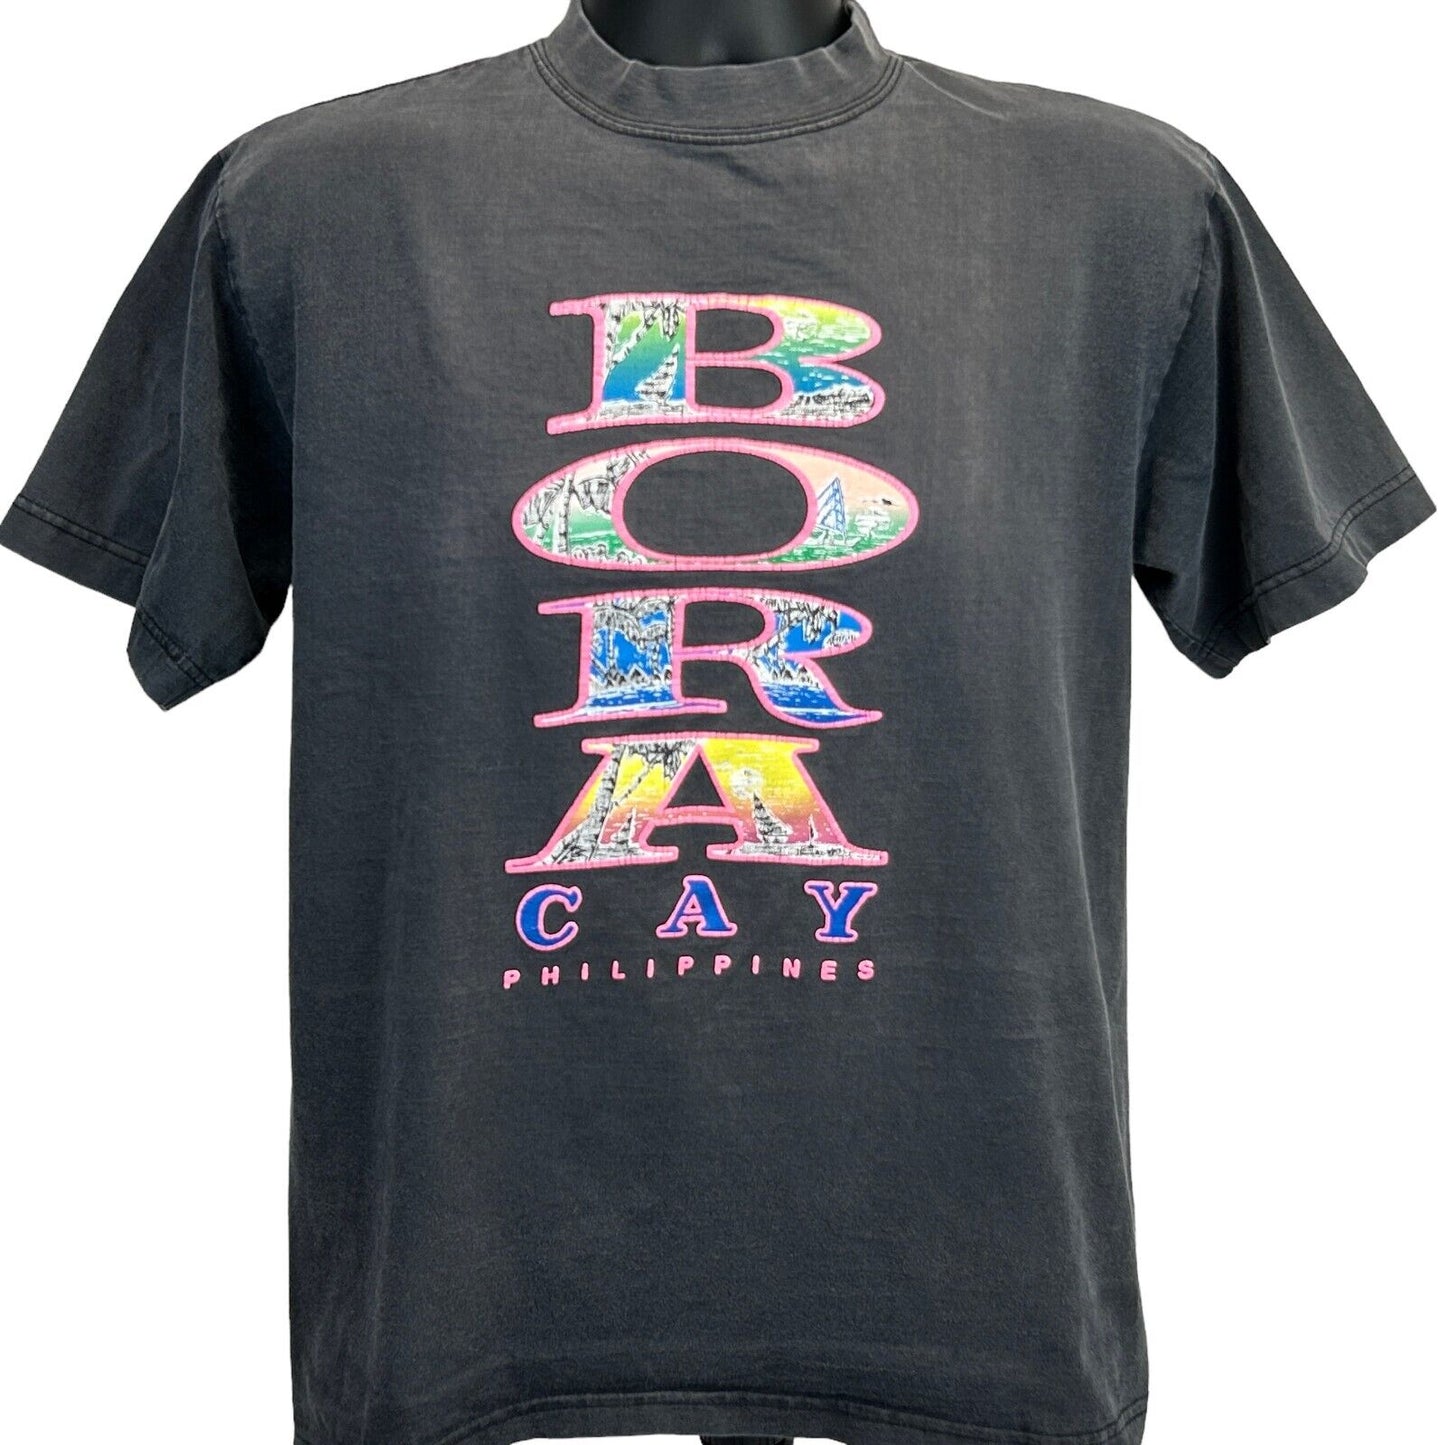 Boracay Philippines Vintage 90s T Shirt Travel Tourist Tourism Black Tee Medium